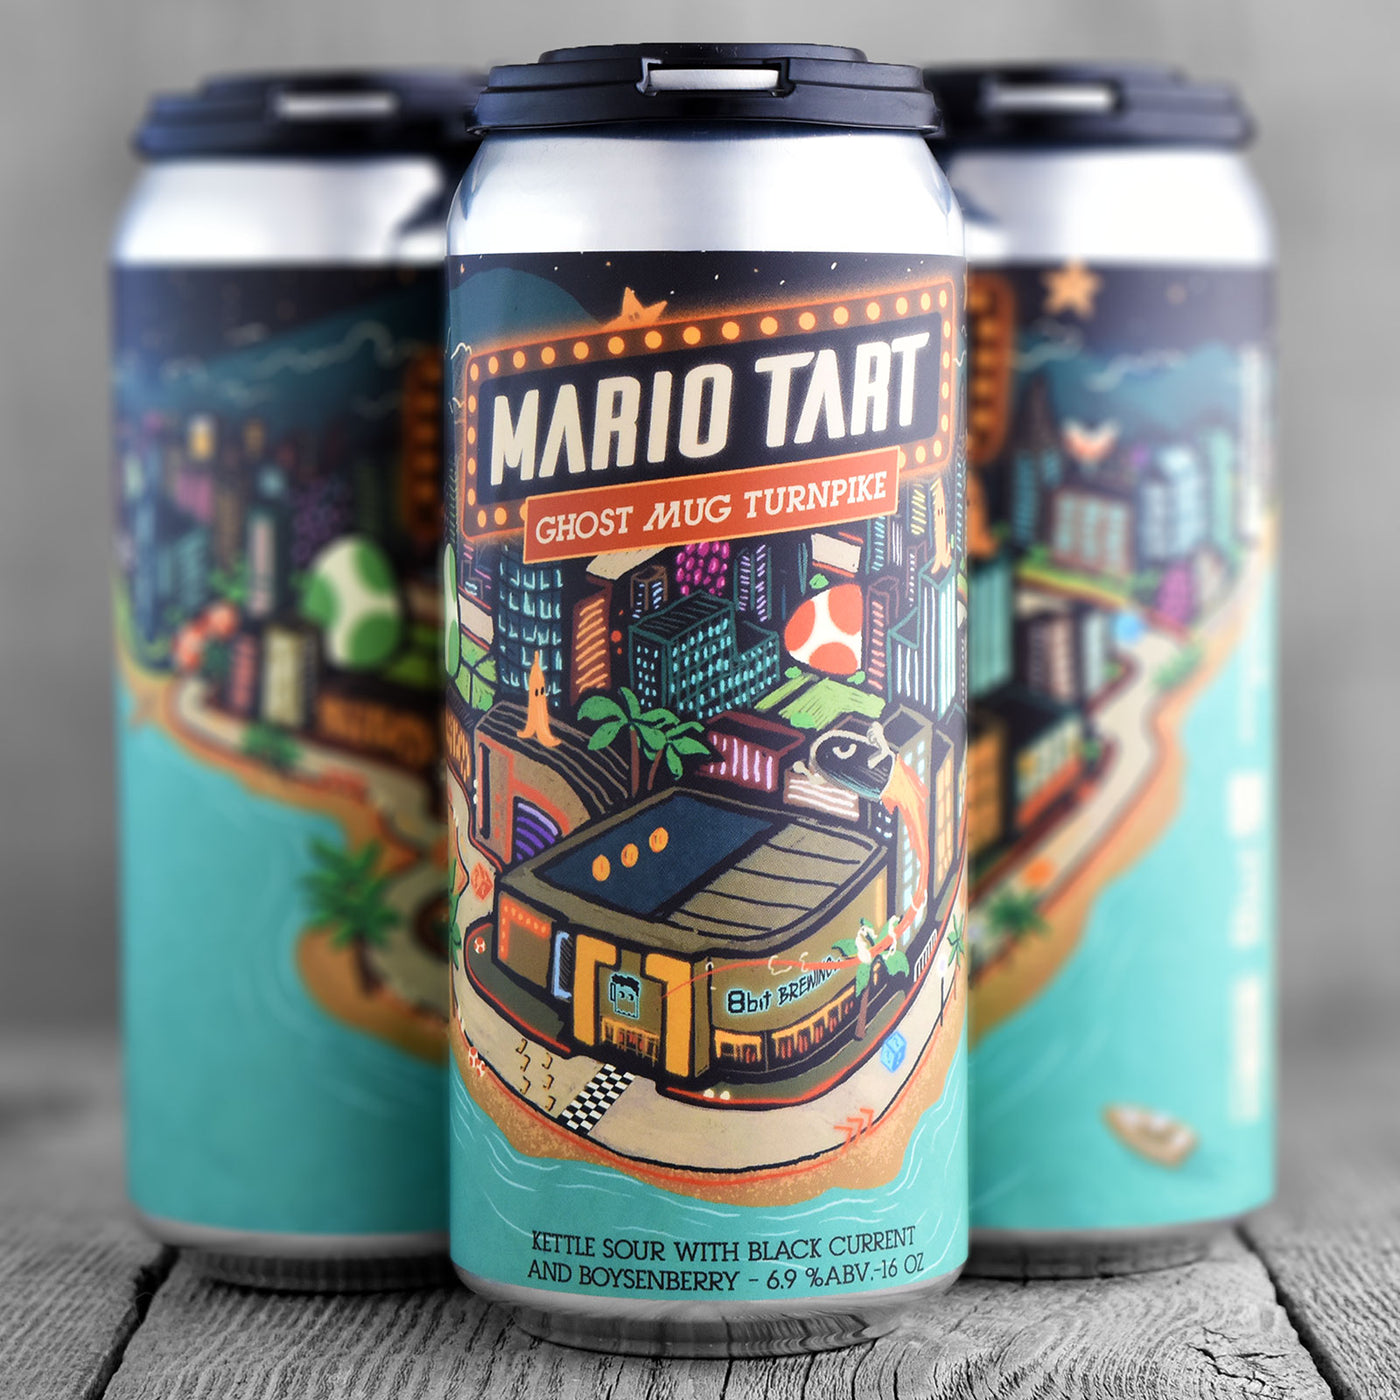 8 Bit Mario Tart - Ghost Mug Turnpike (Limit 1)